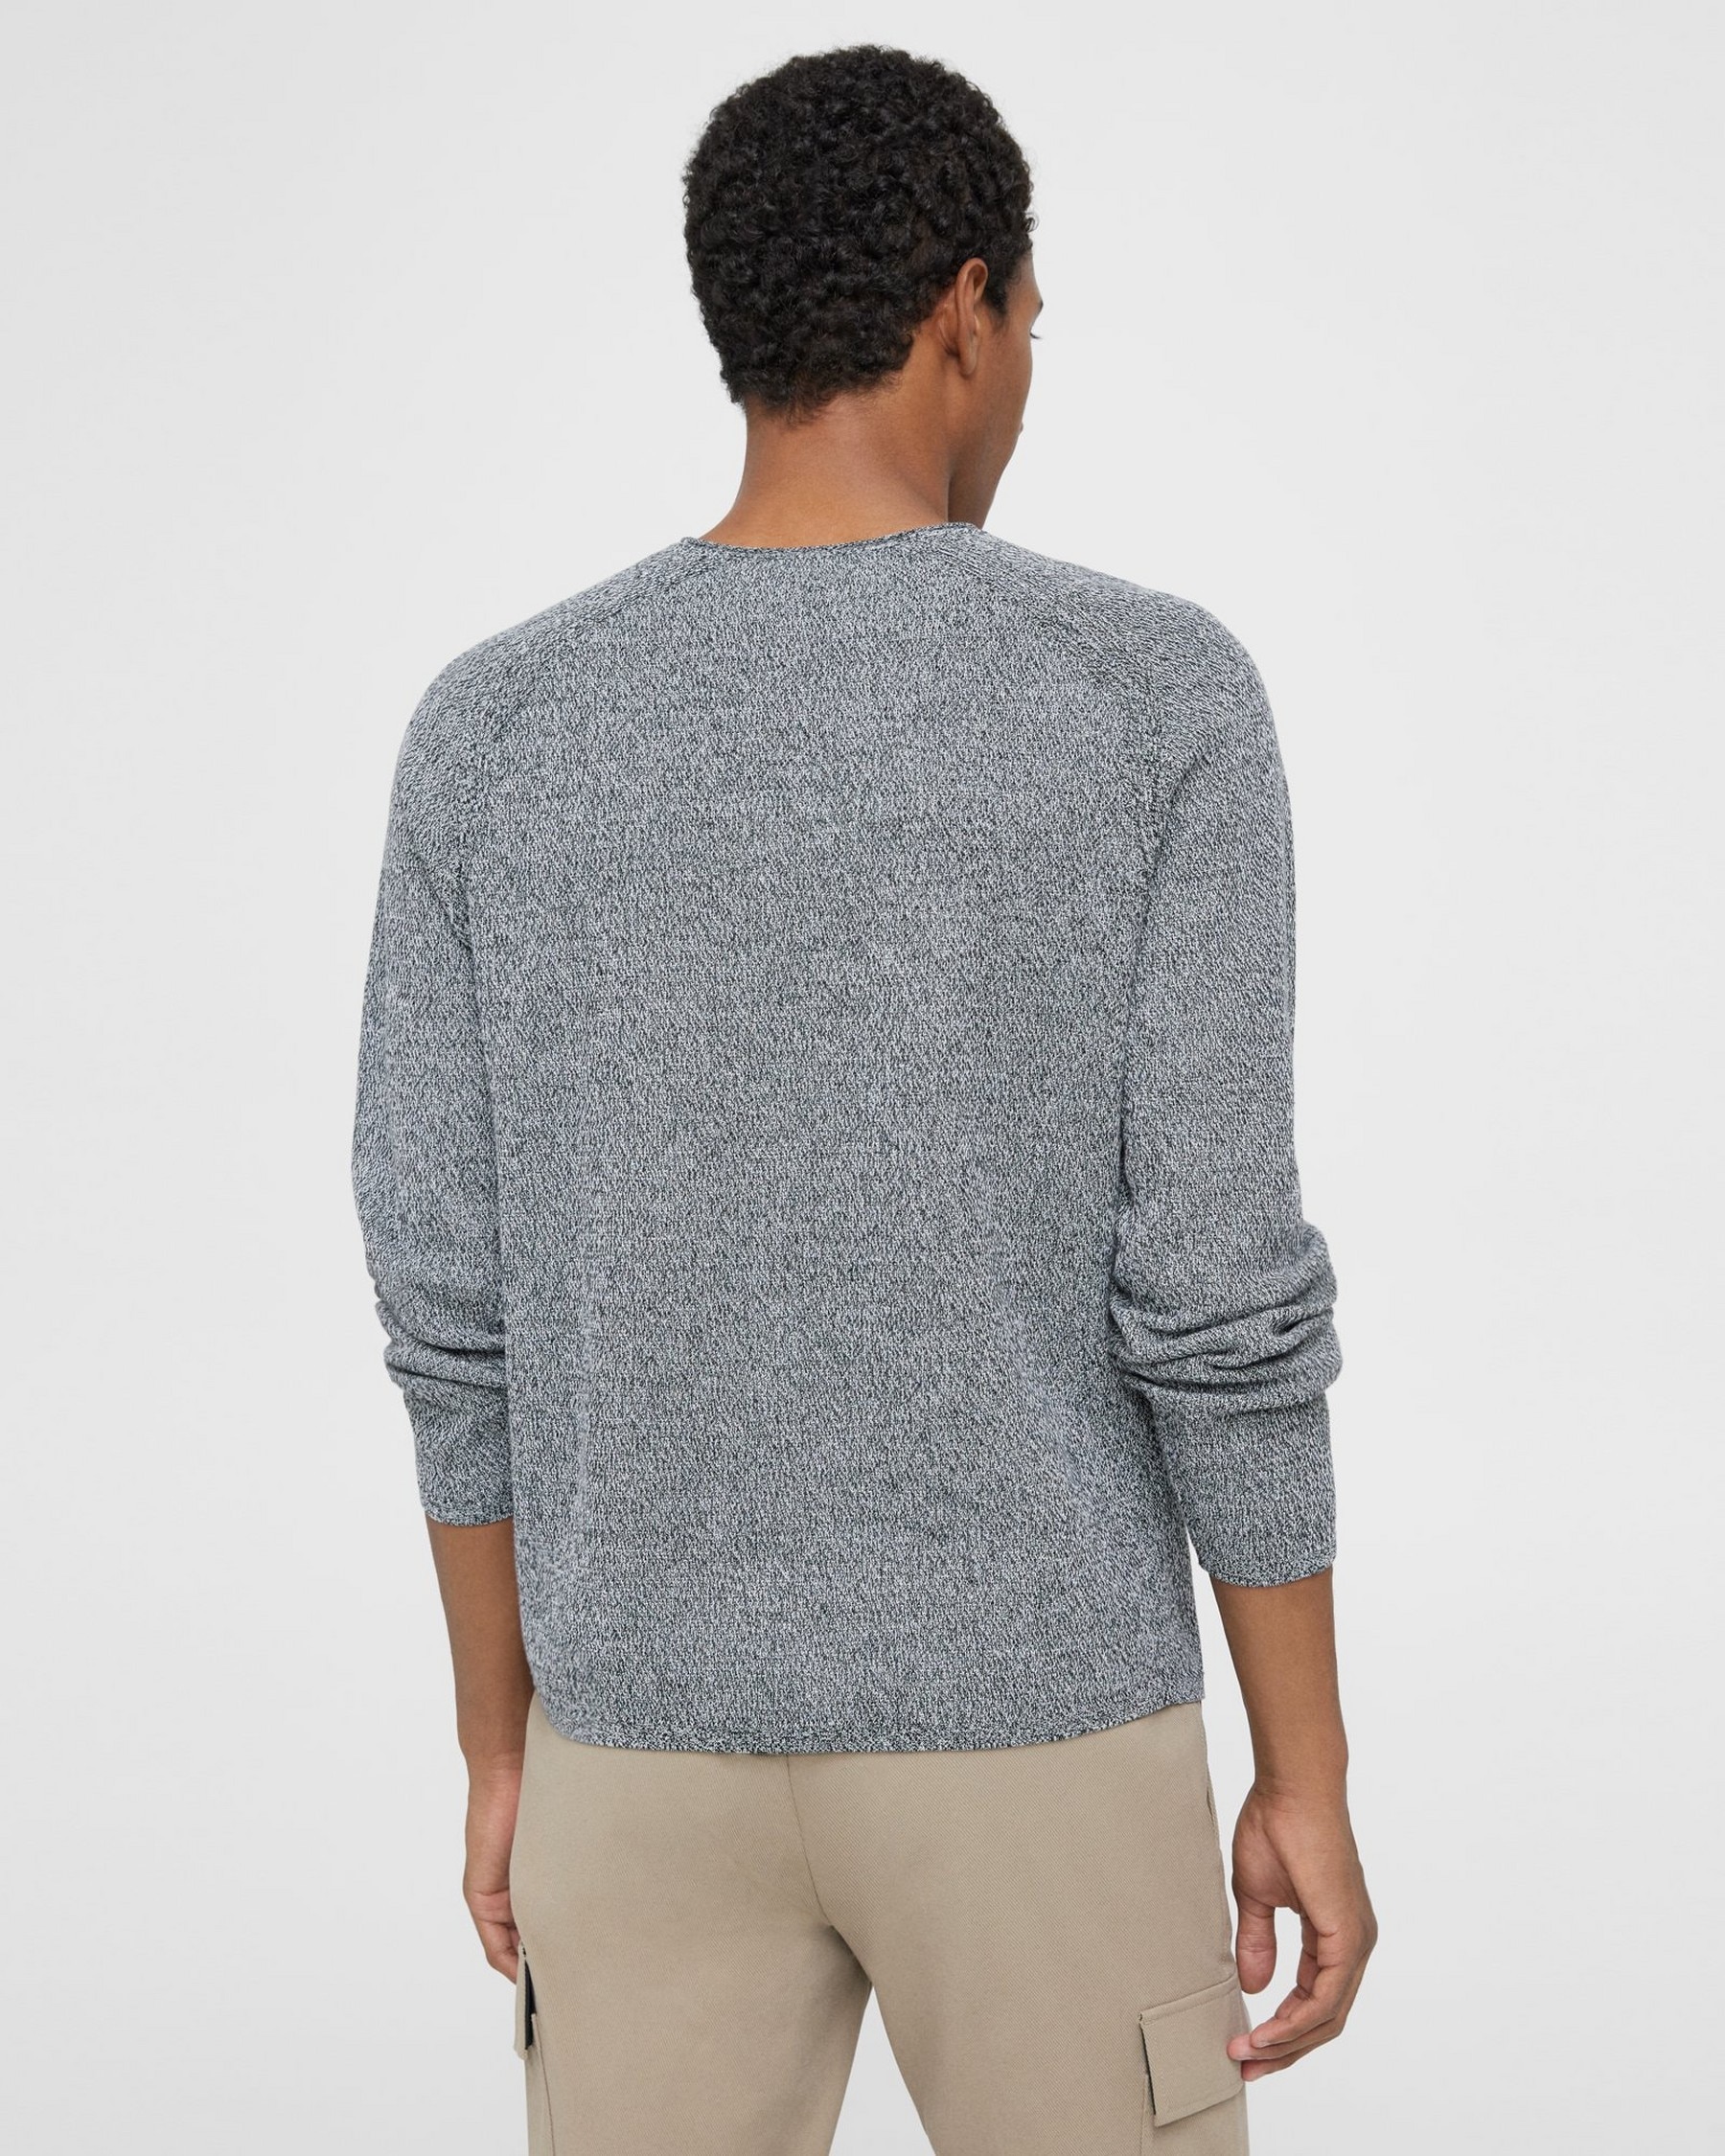 Nare Sweater in Cotton